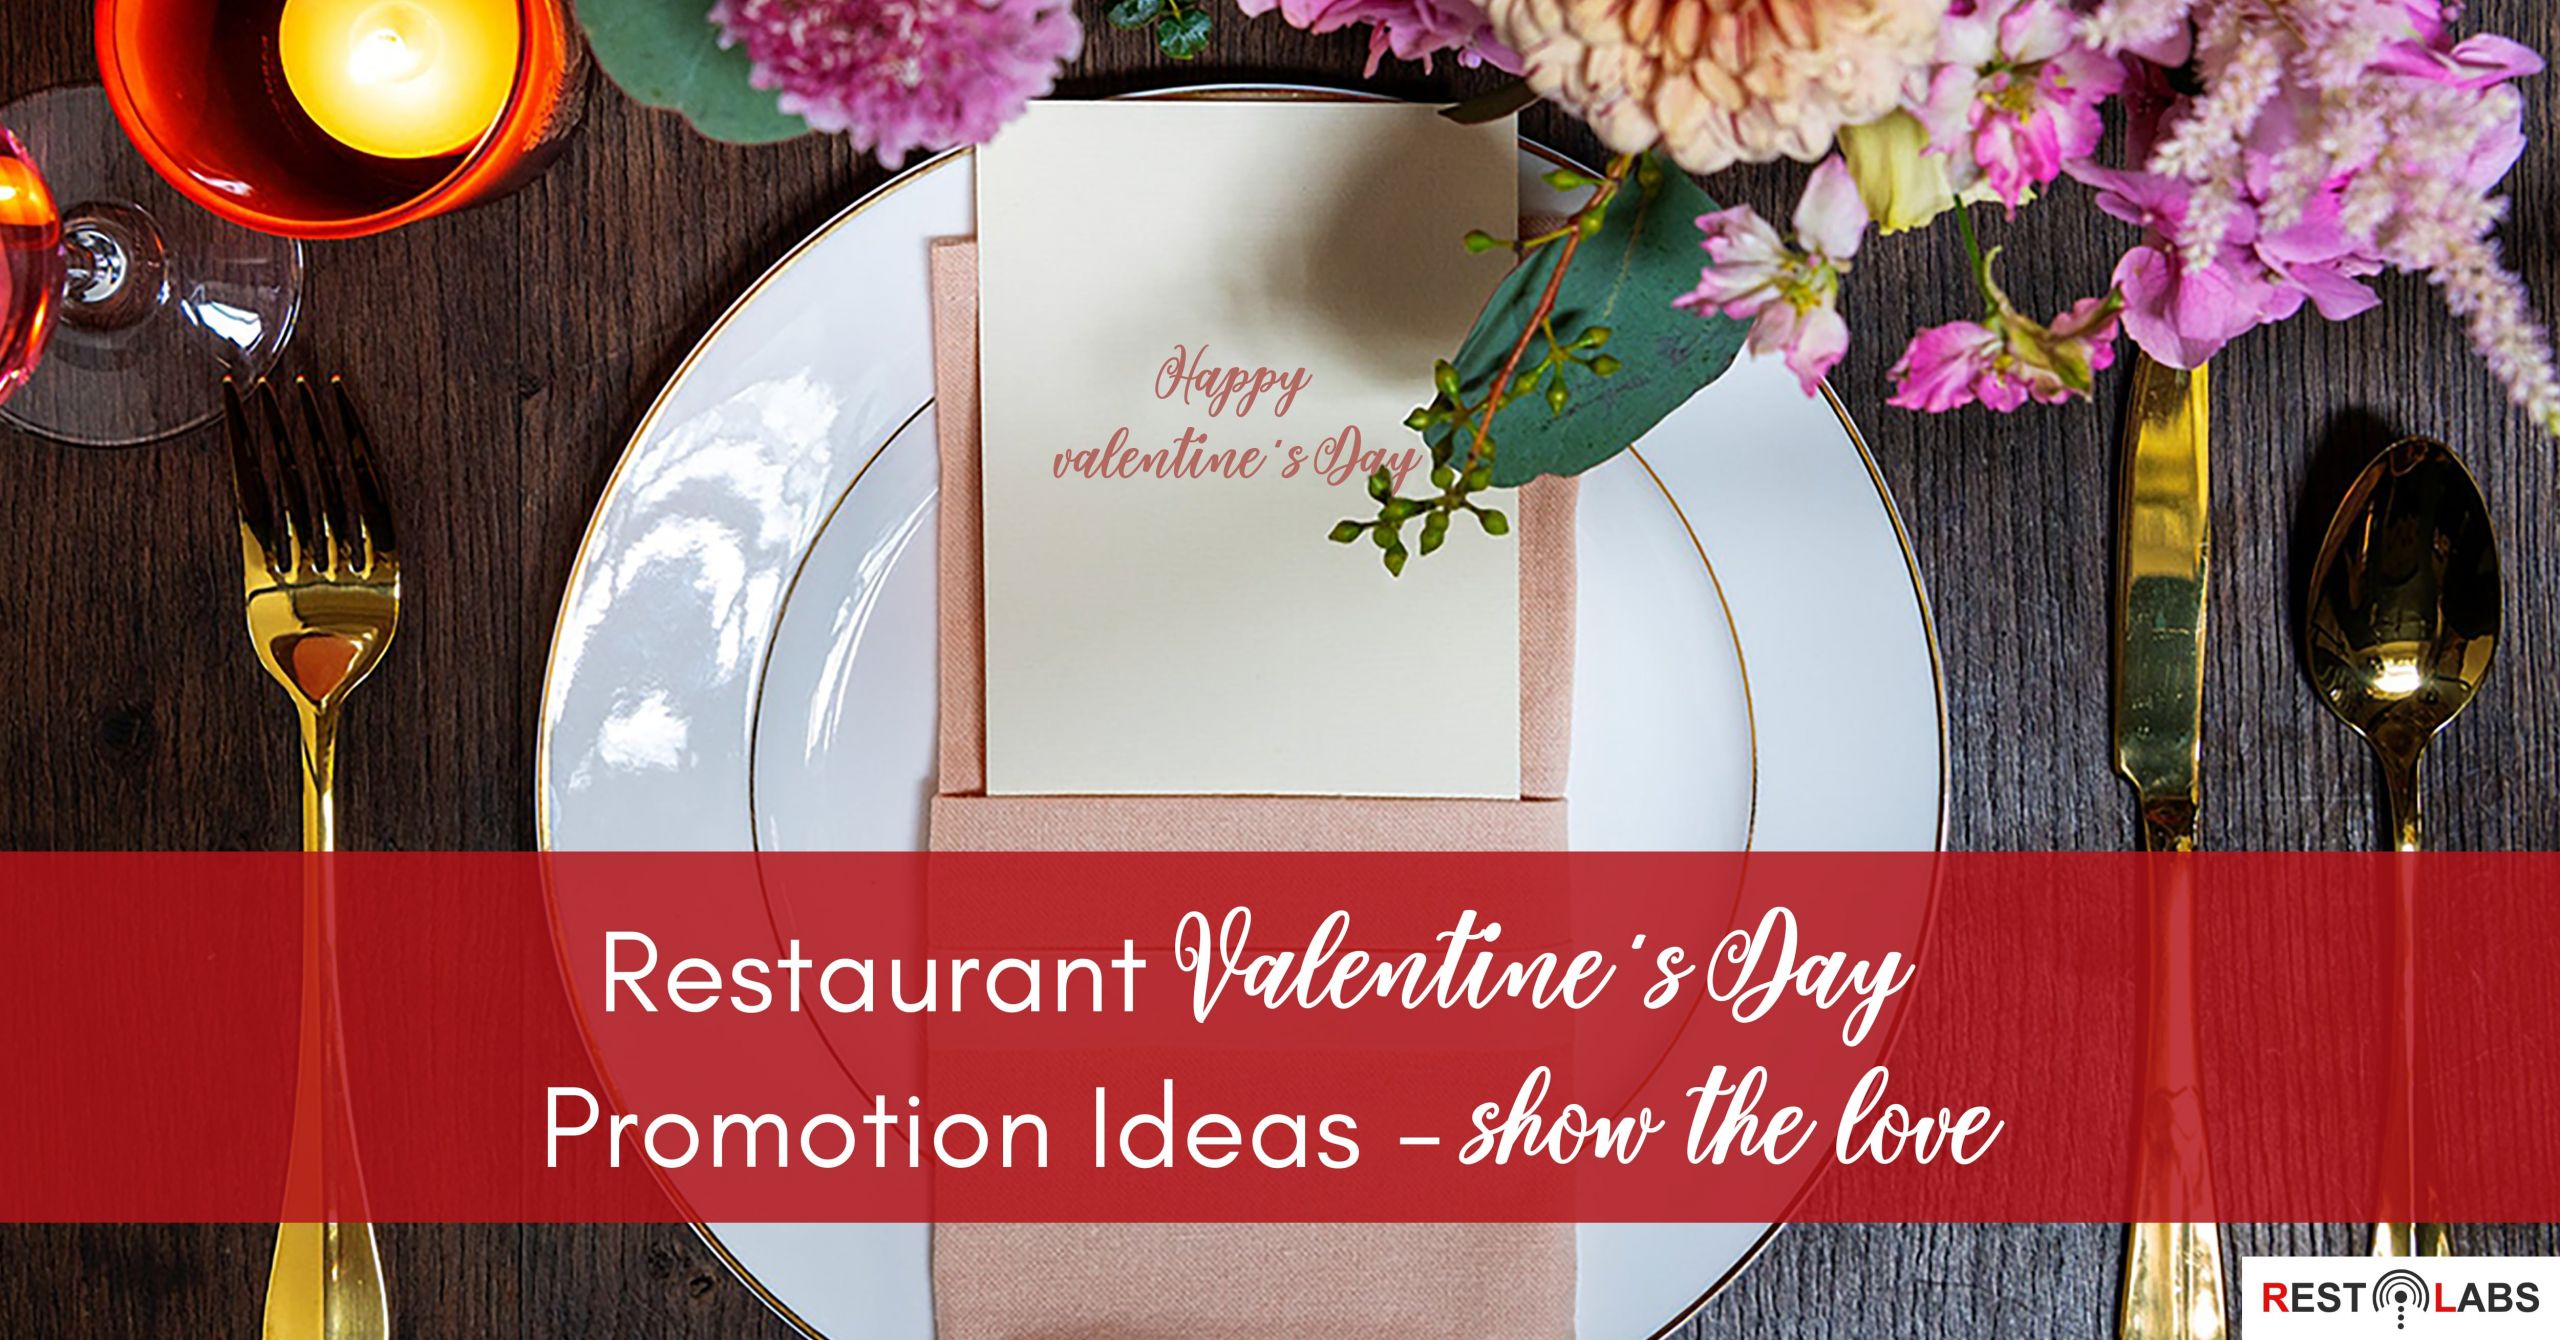 Valentines Day Restaurant Ideas
 Restaurant Valentine s Day Promotion Ideas show the love